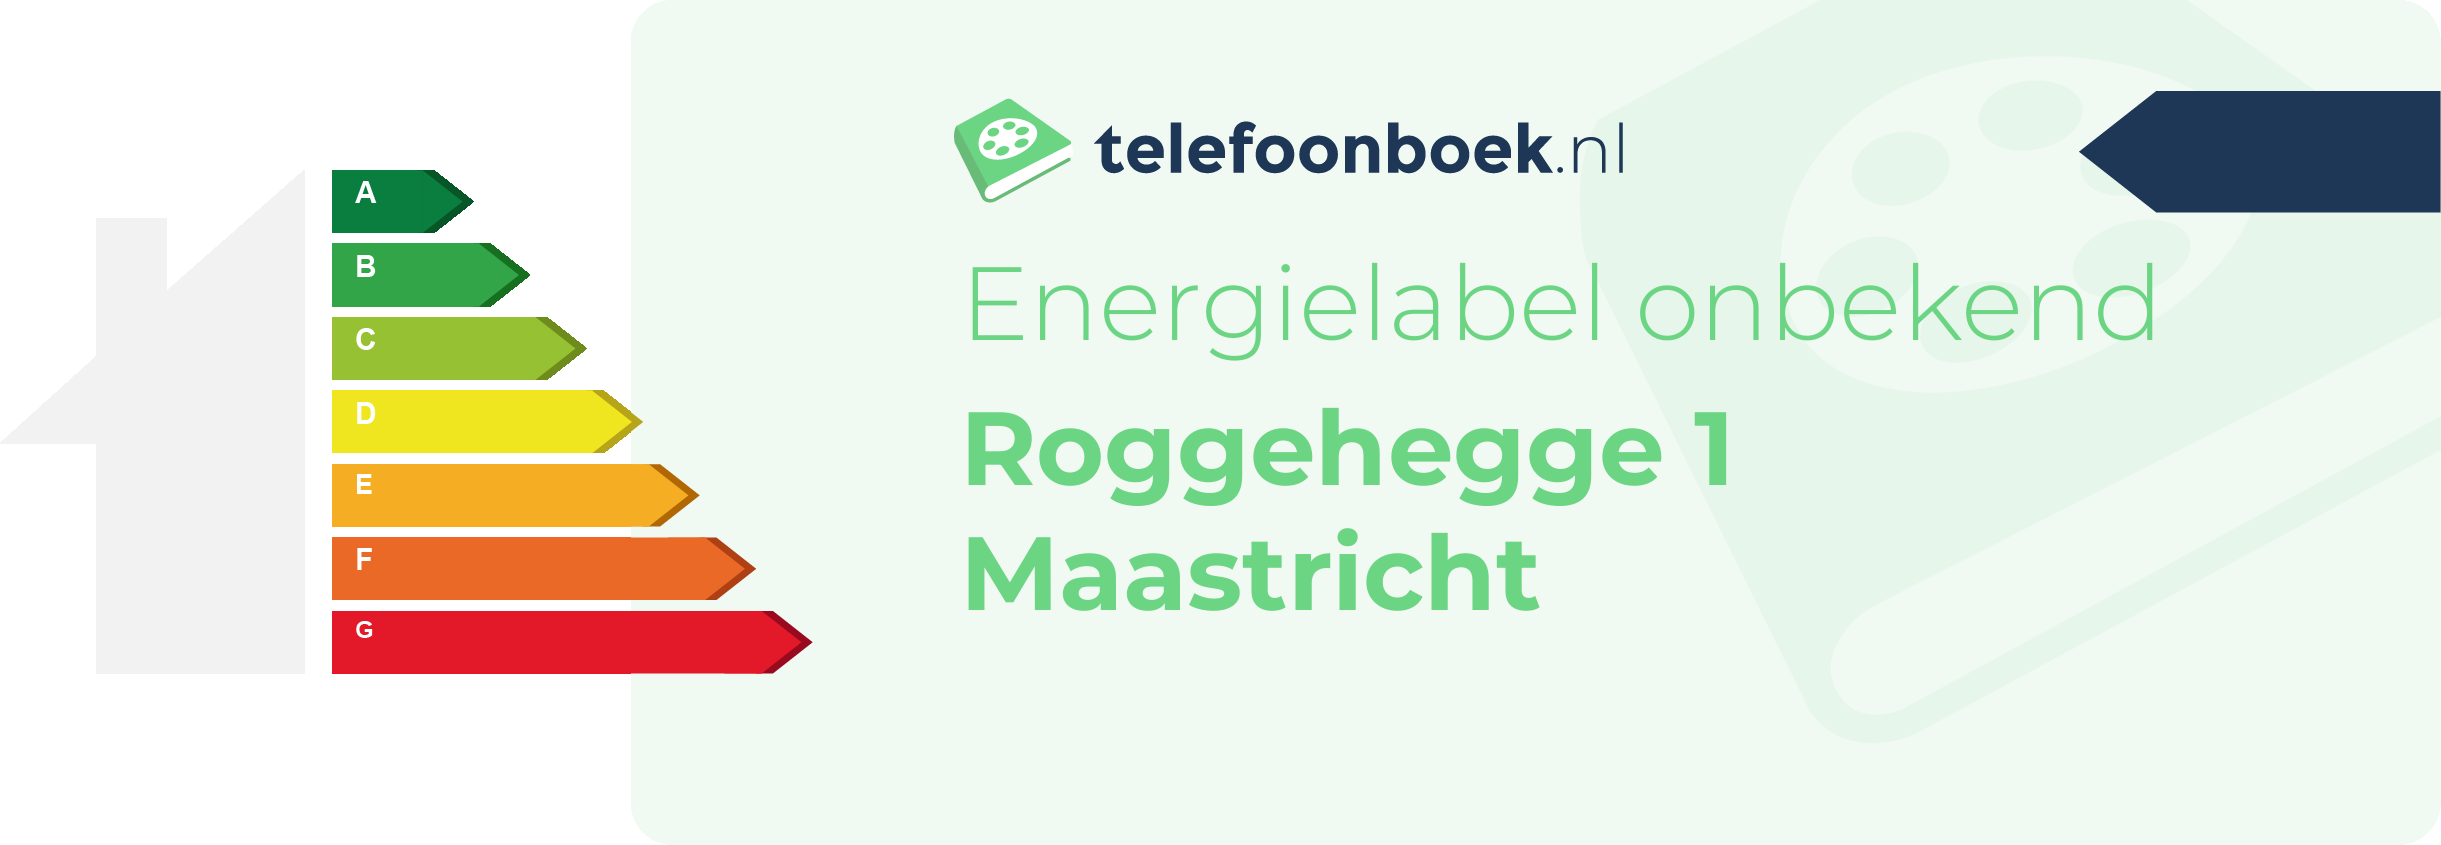 Energielabel Roggehegge 1 Maastricht